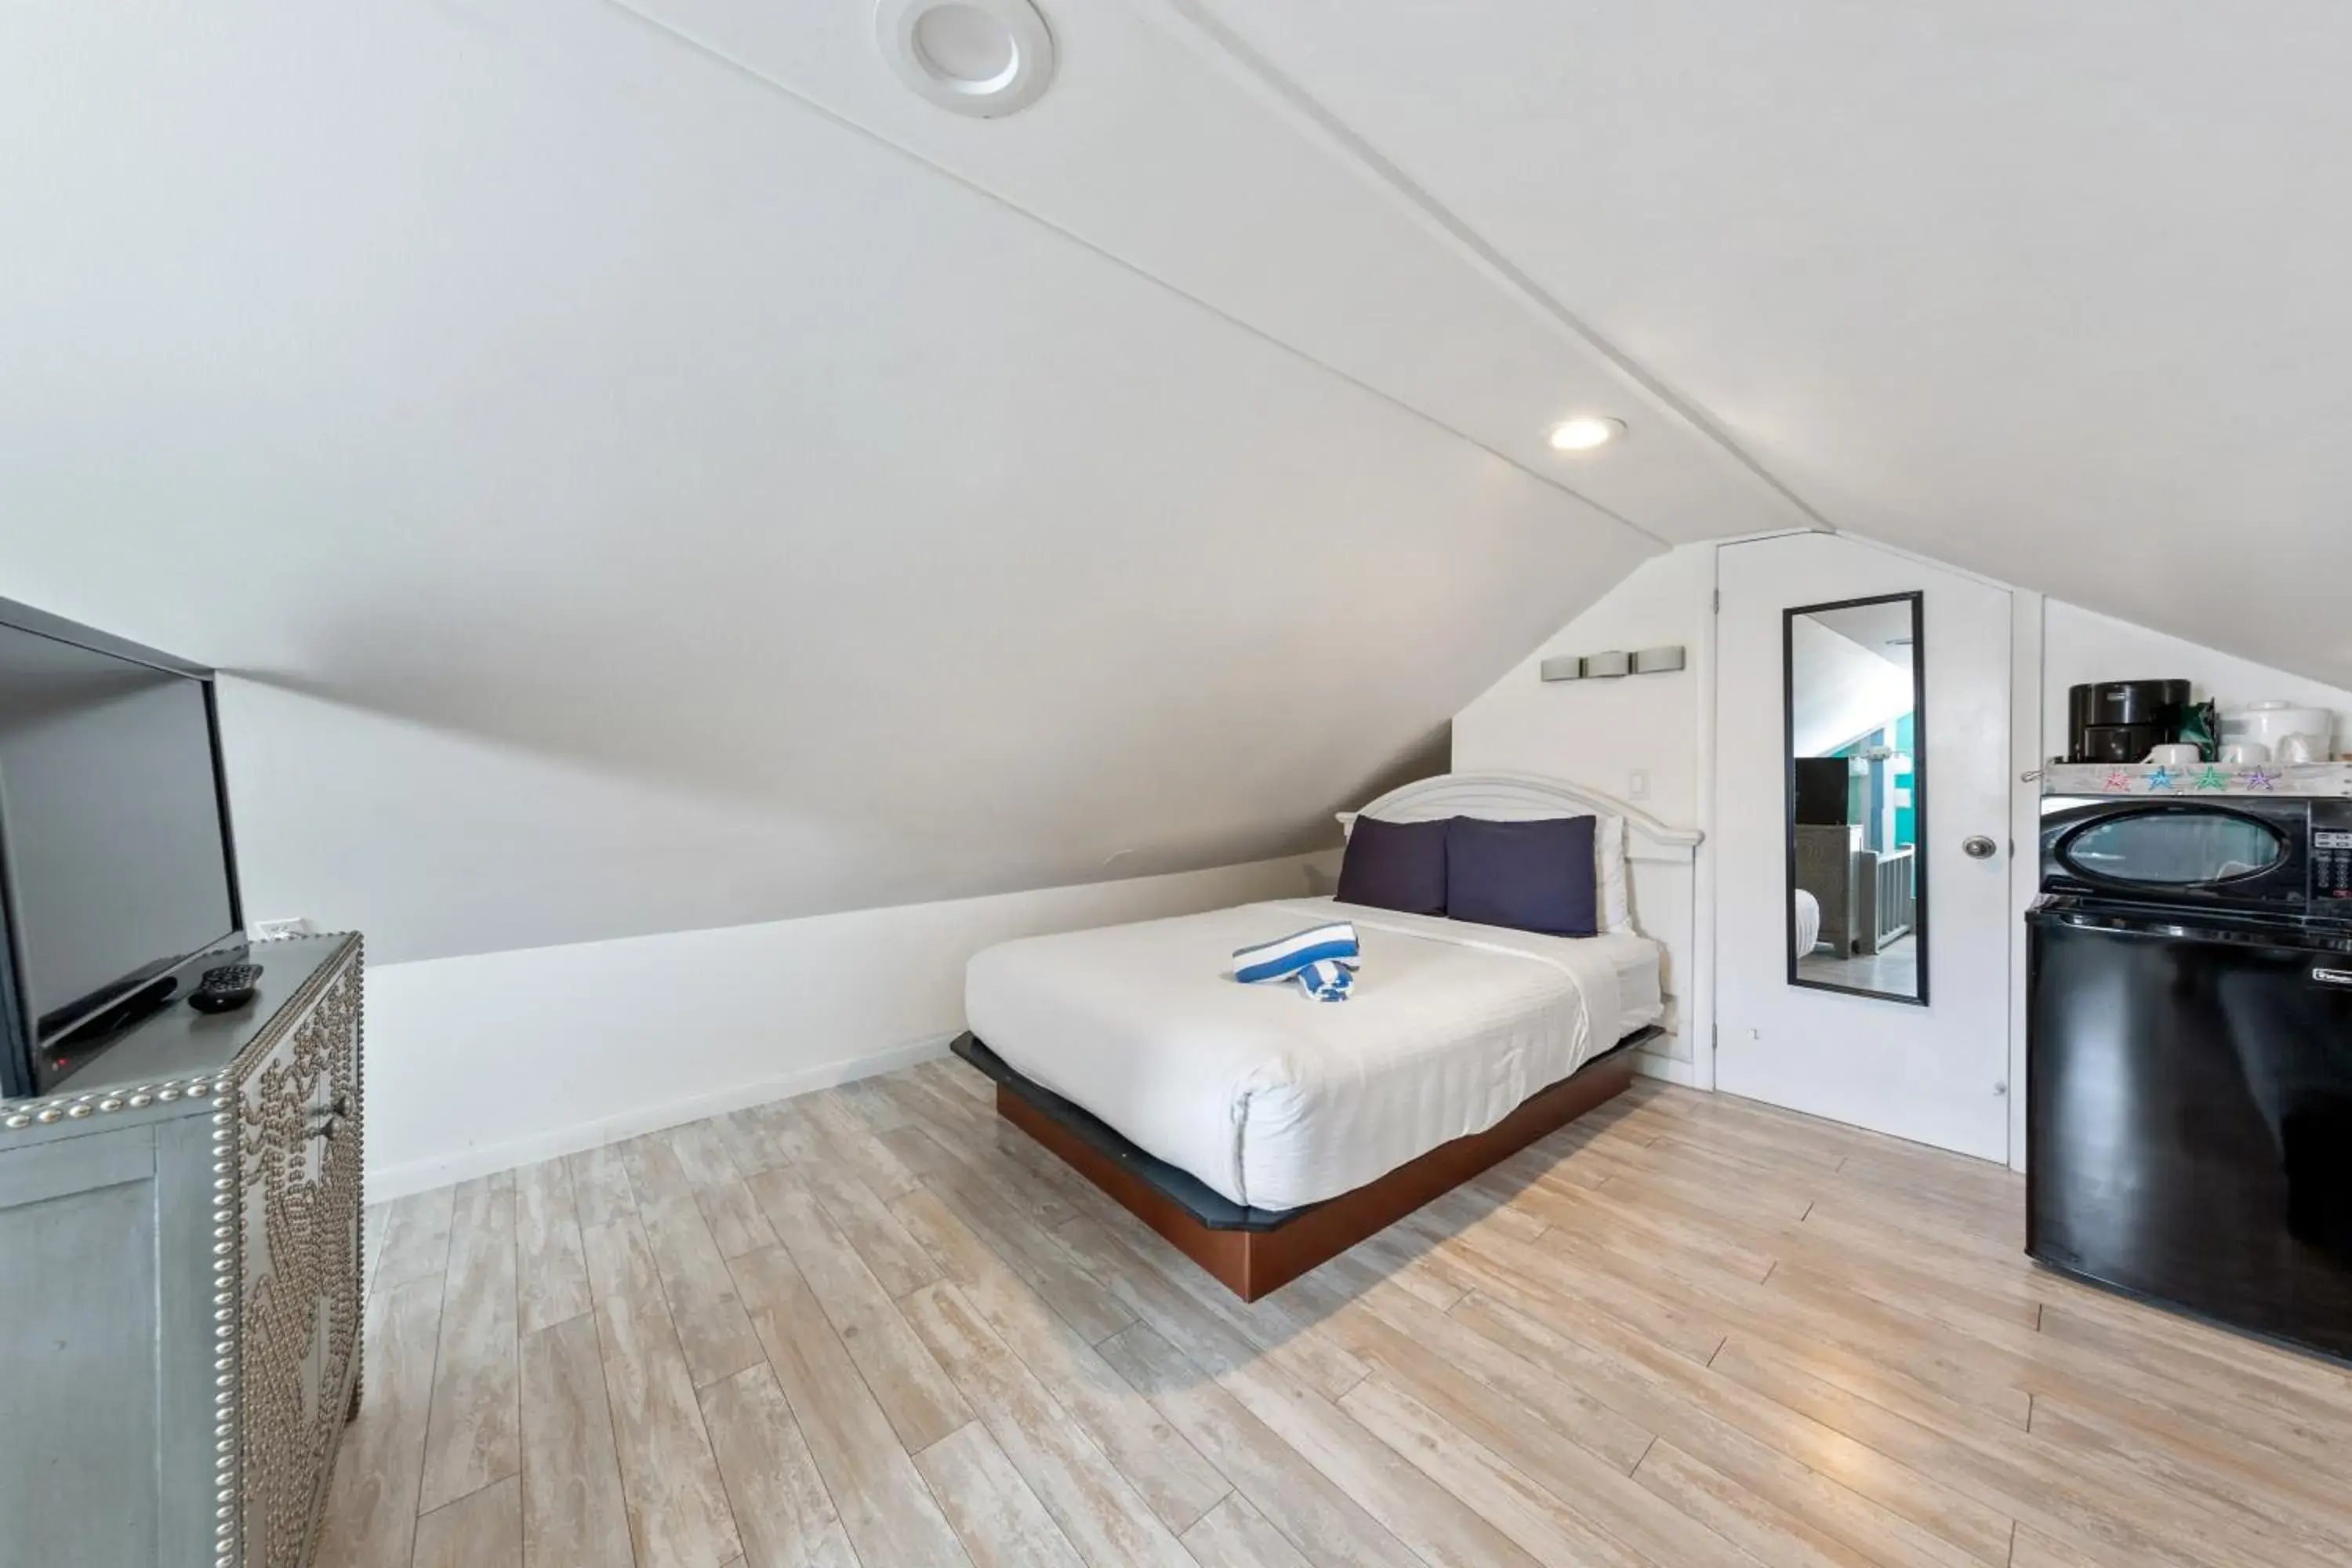 Bedroom, Bed in Wicker Guesthouse